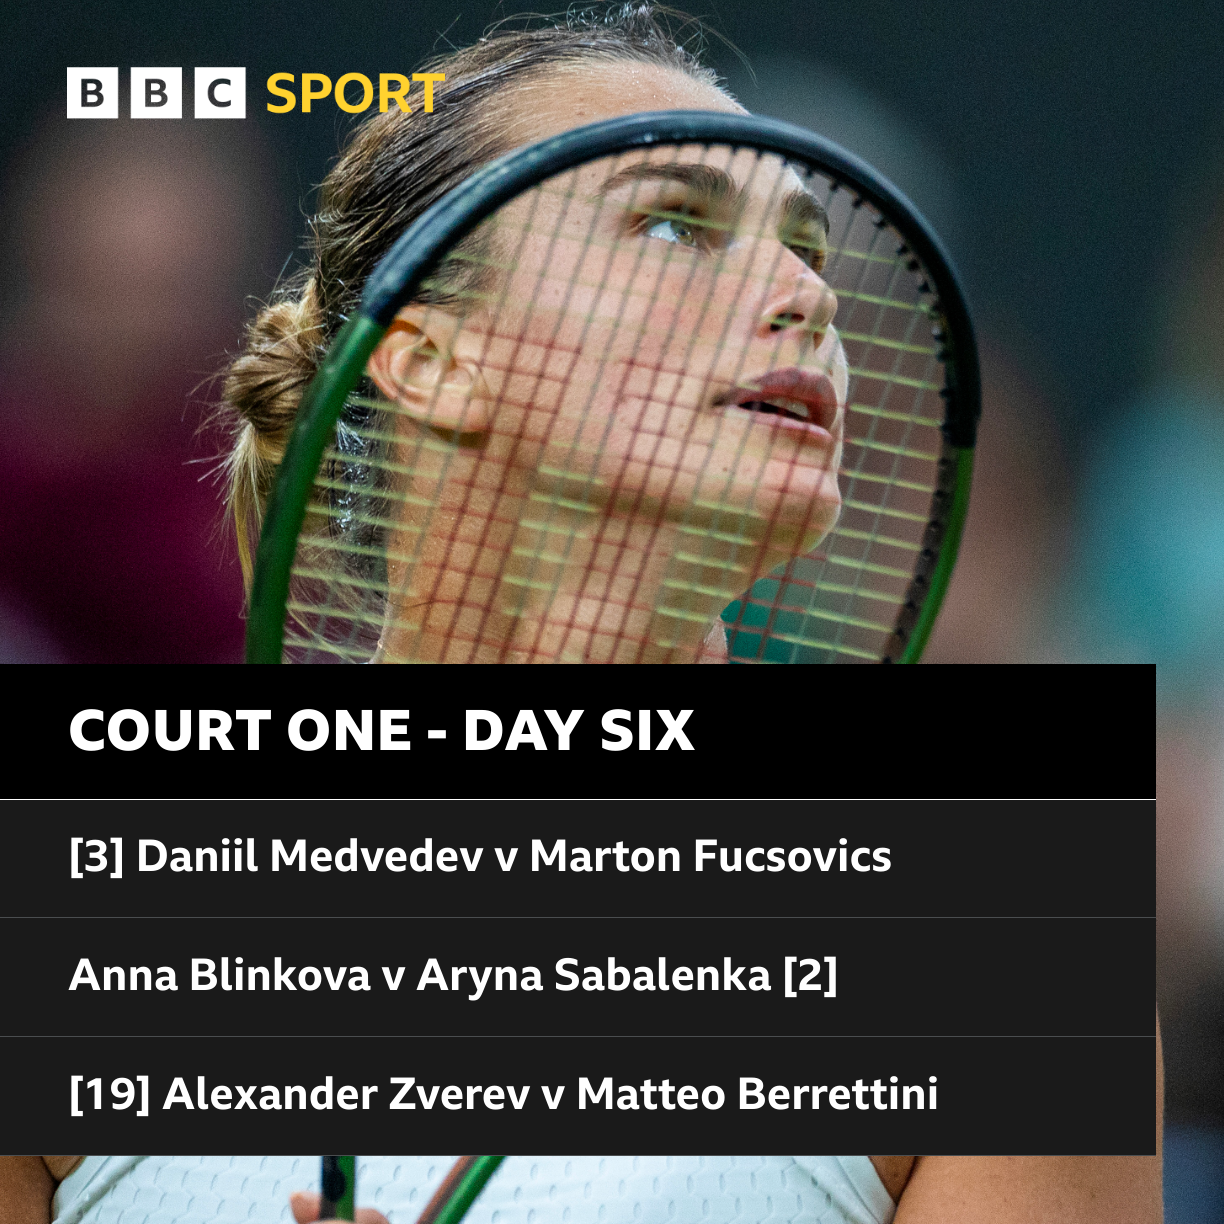 bbc tennis live